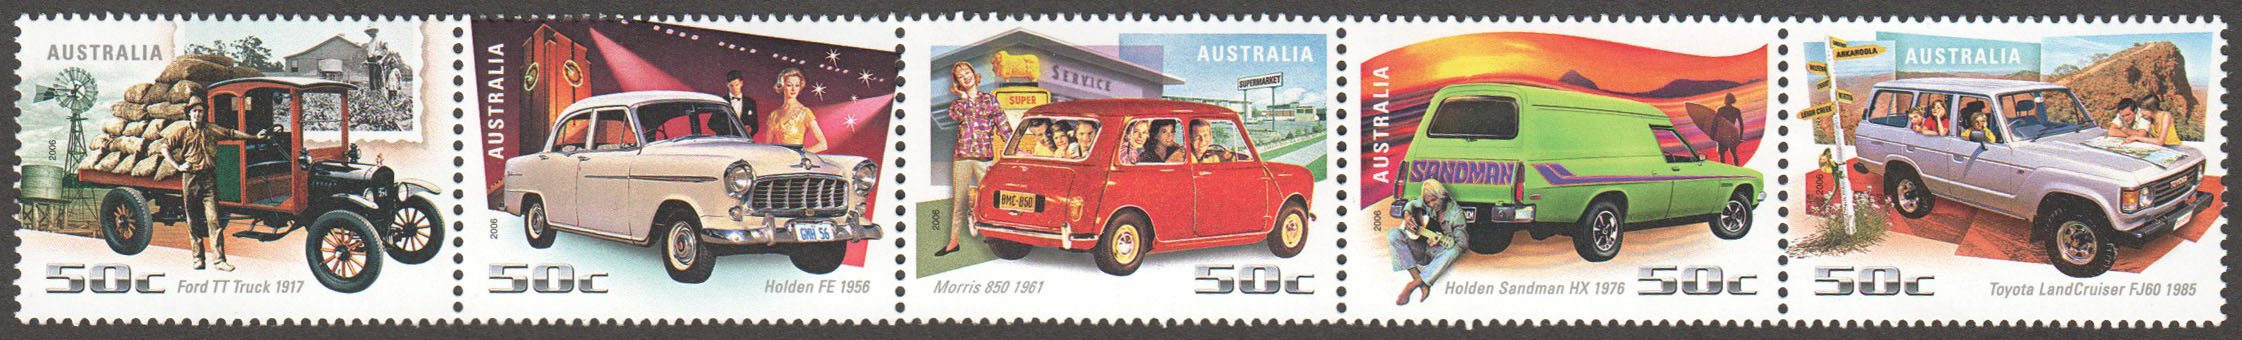 Australia Scott 2552b MNH (A2-16) - Click Image to Close